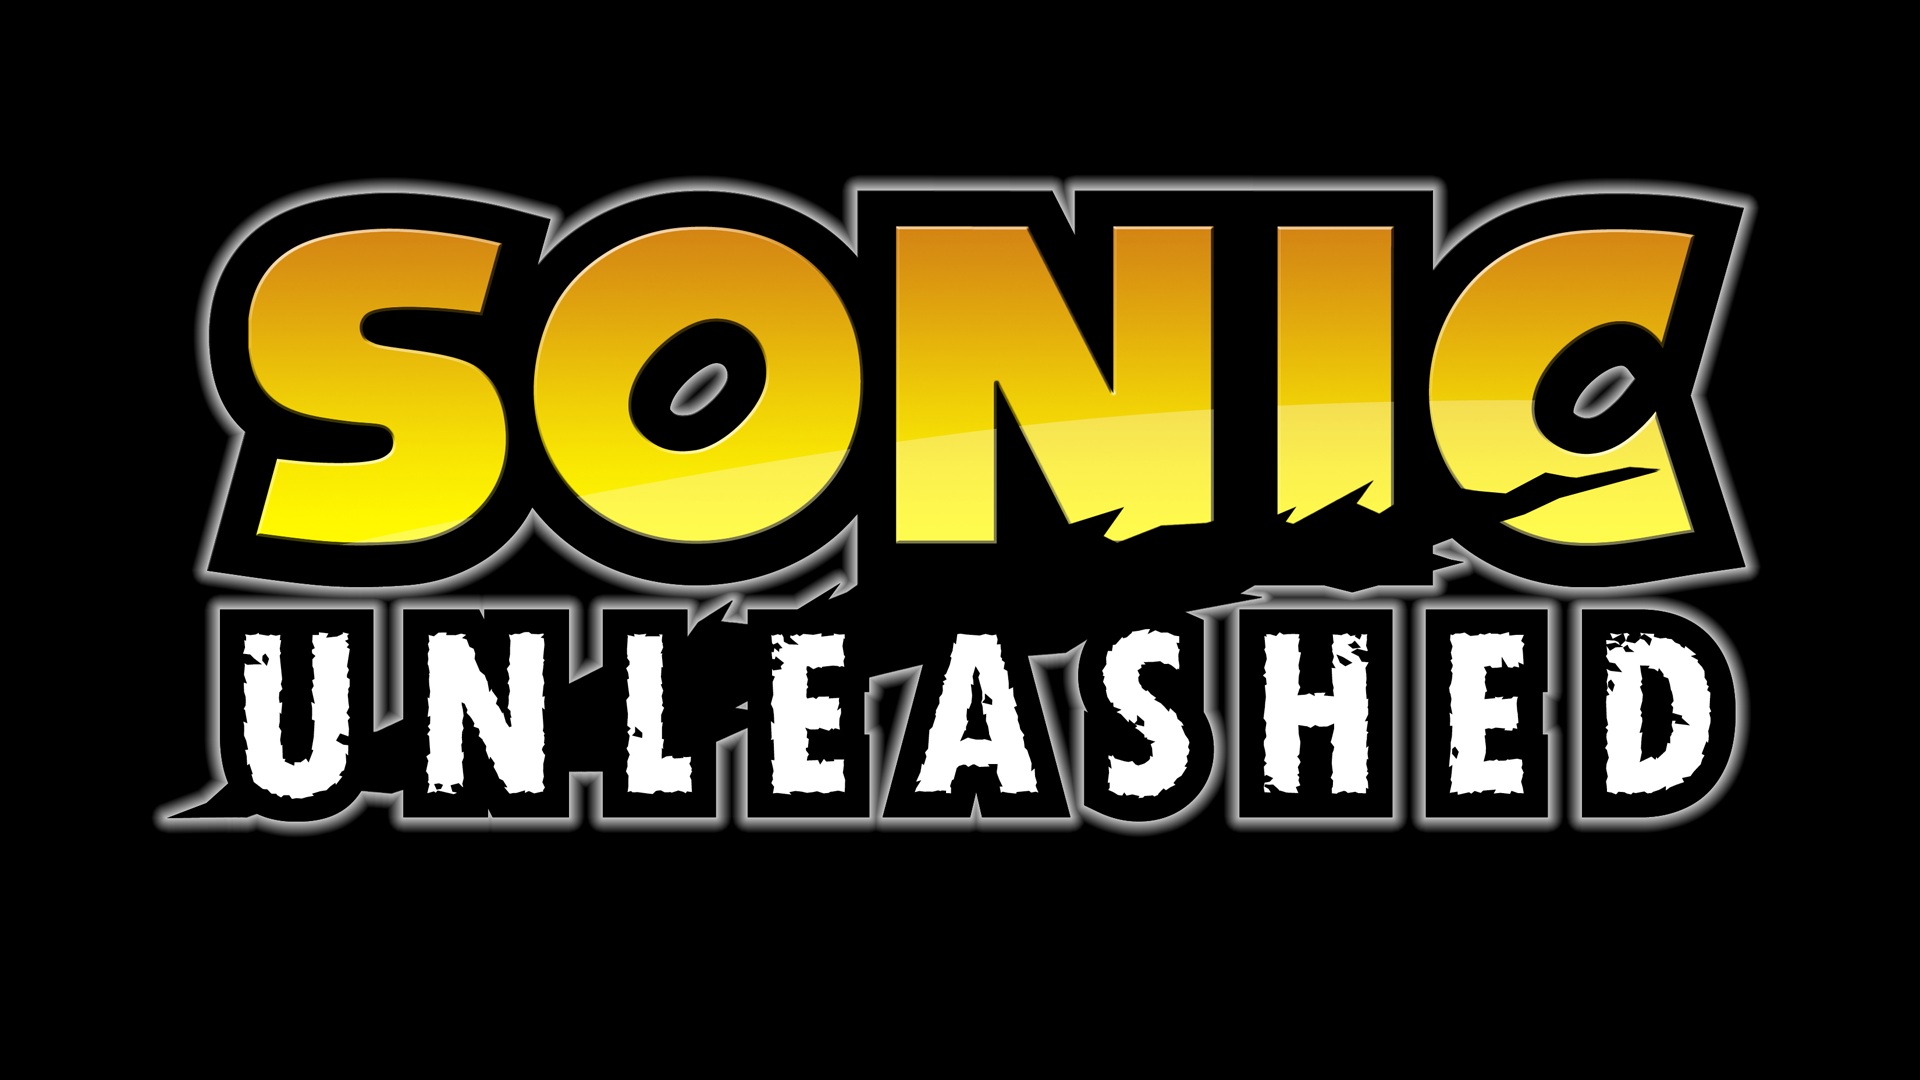 Sonic Unleashed Logo